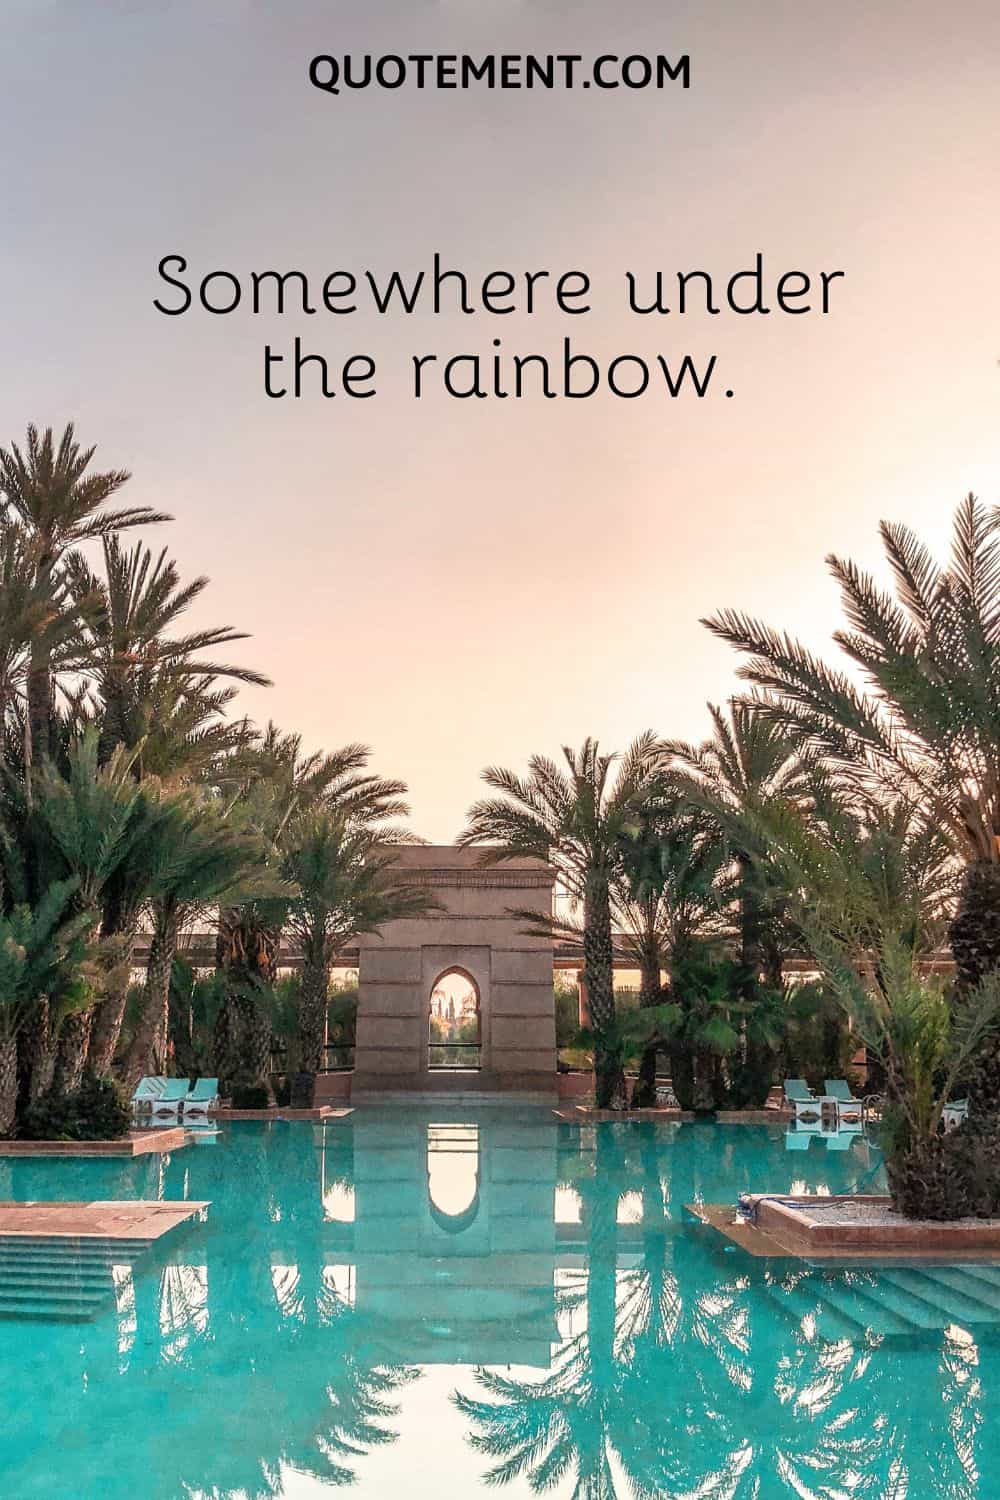 Somewhere under the rainbow.